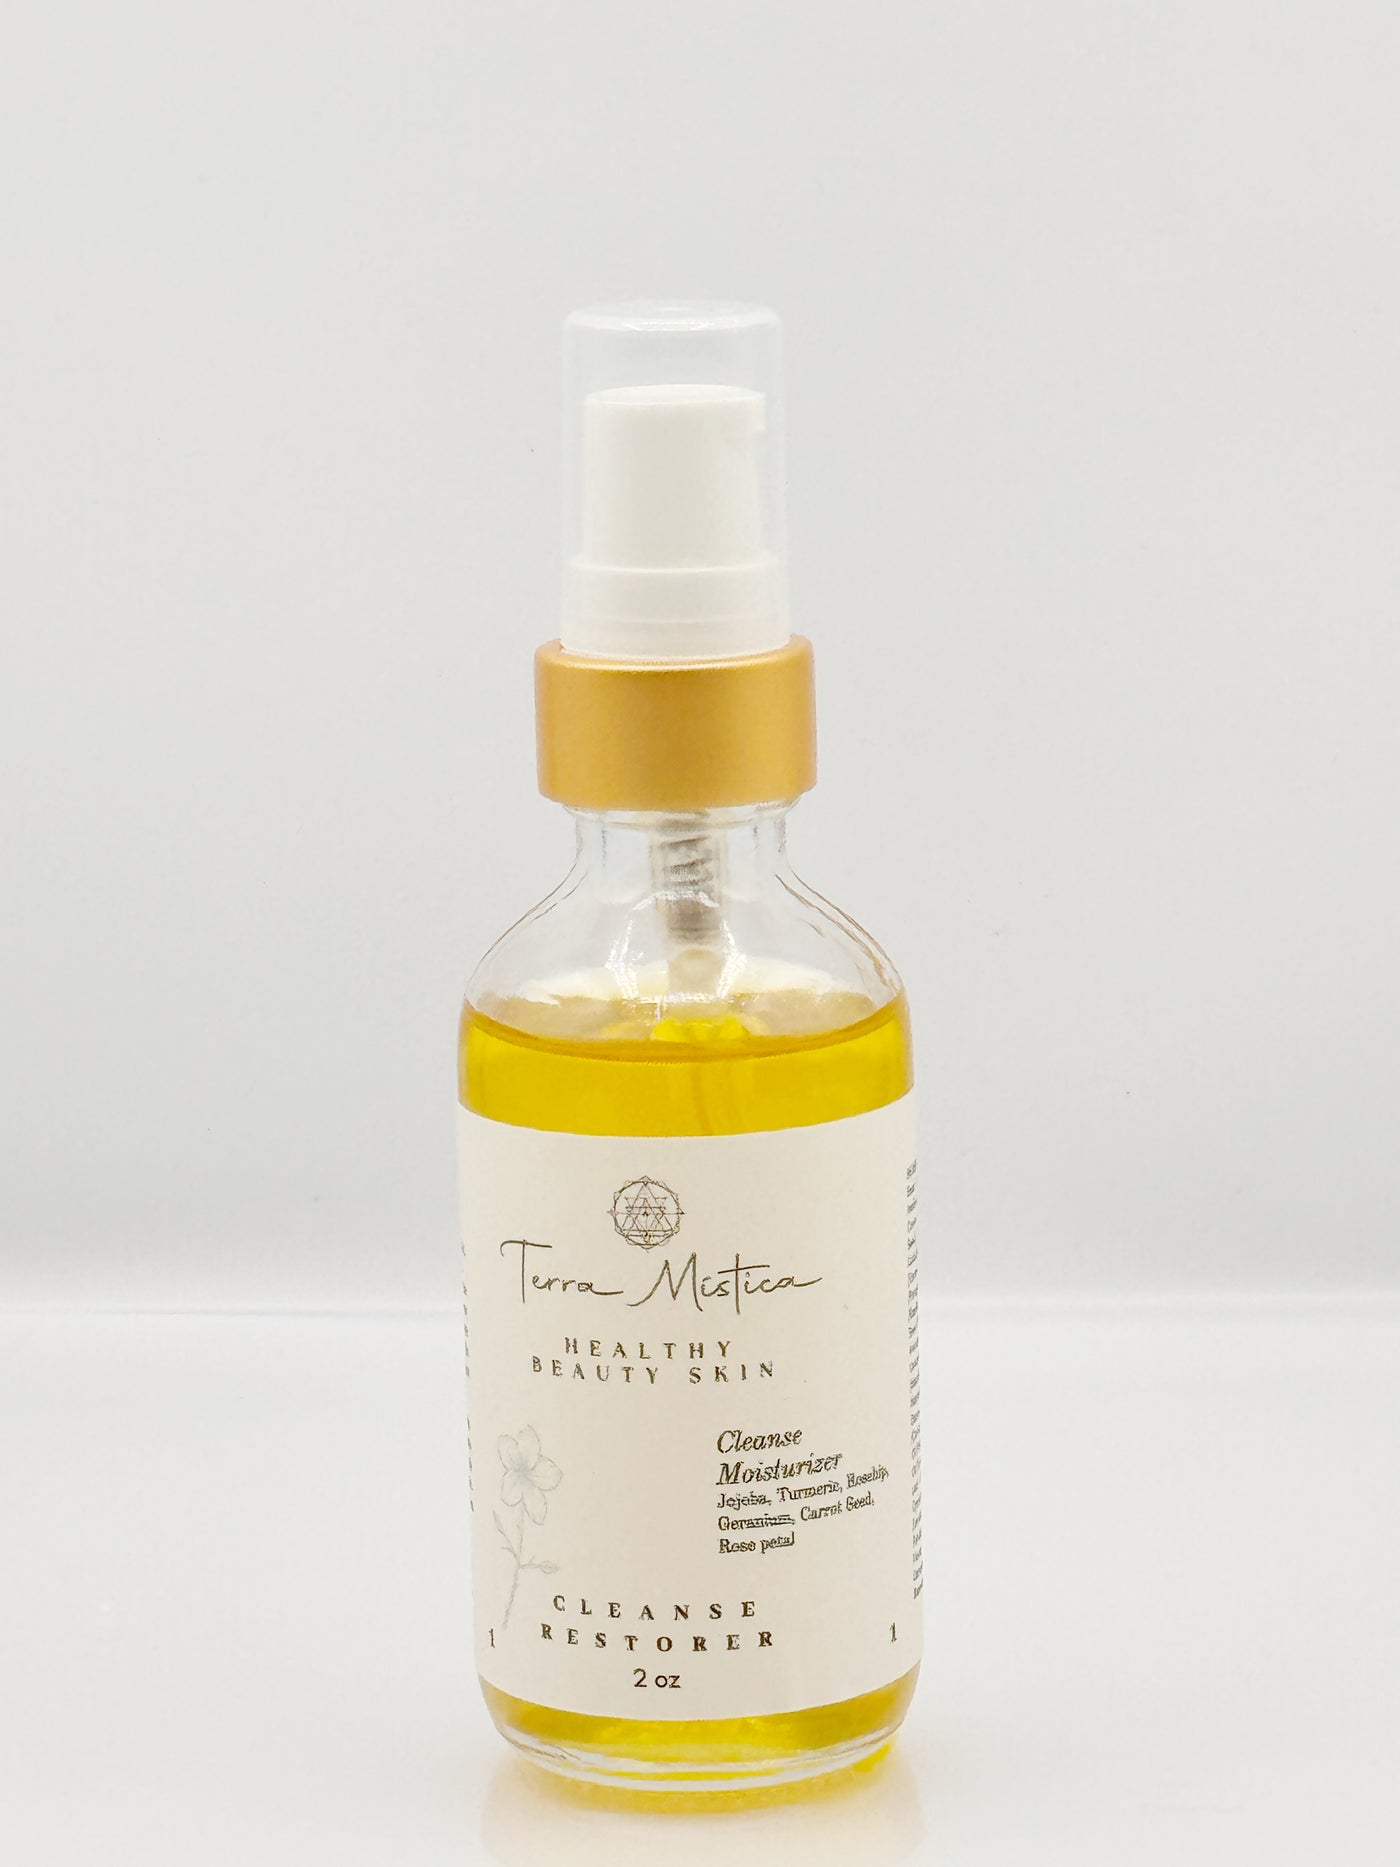 Aceite Limpiador / Cleanse Moisturizer oil